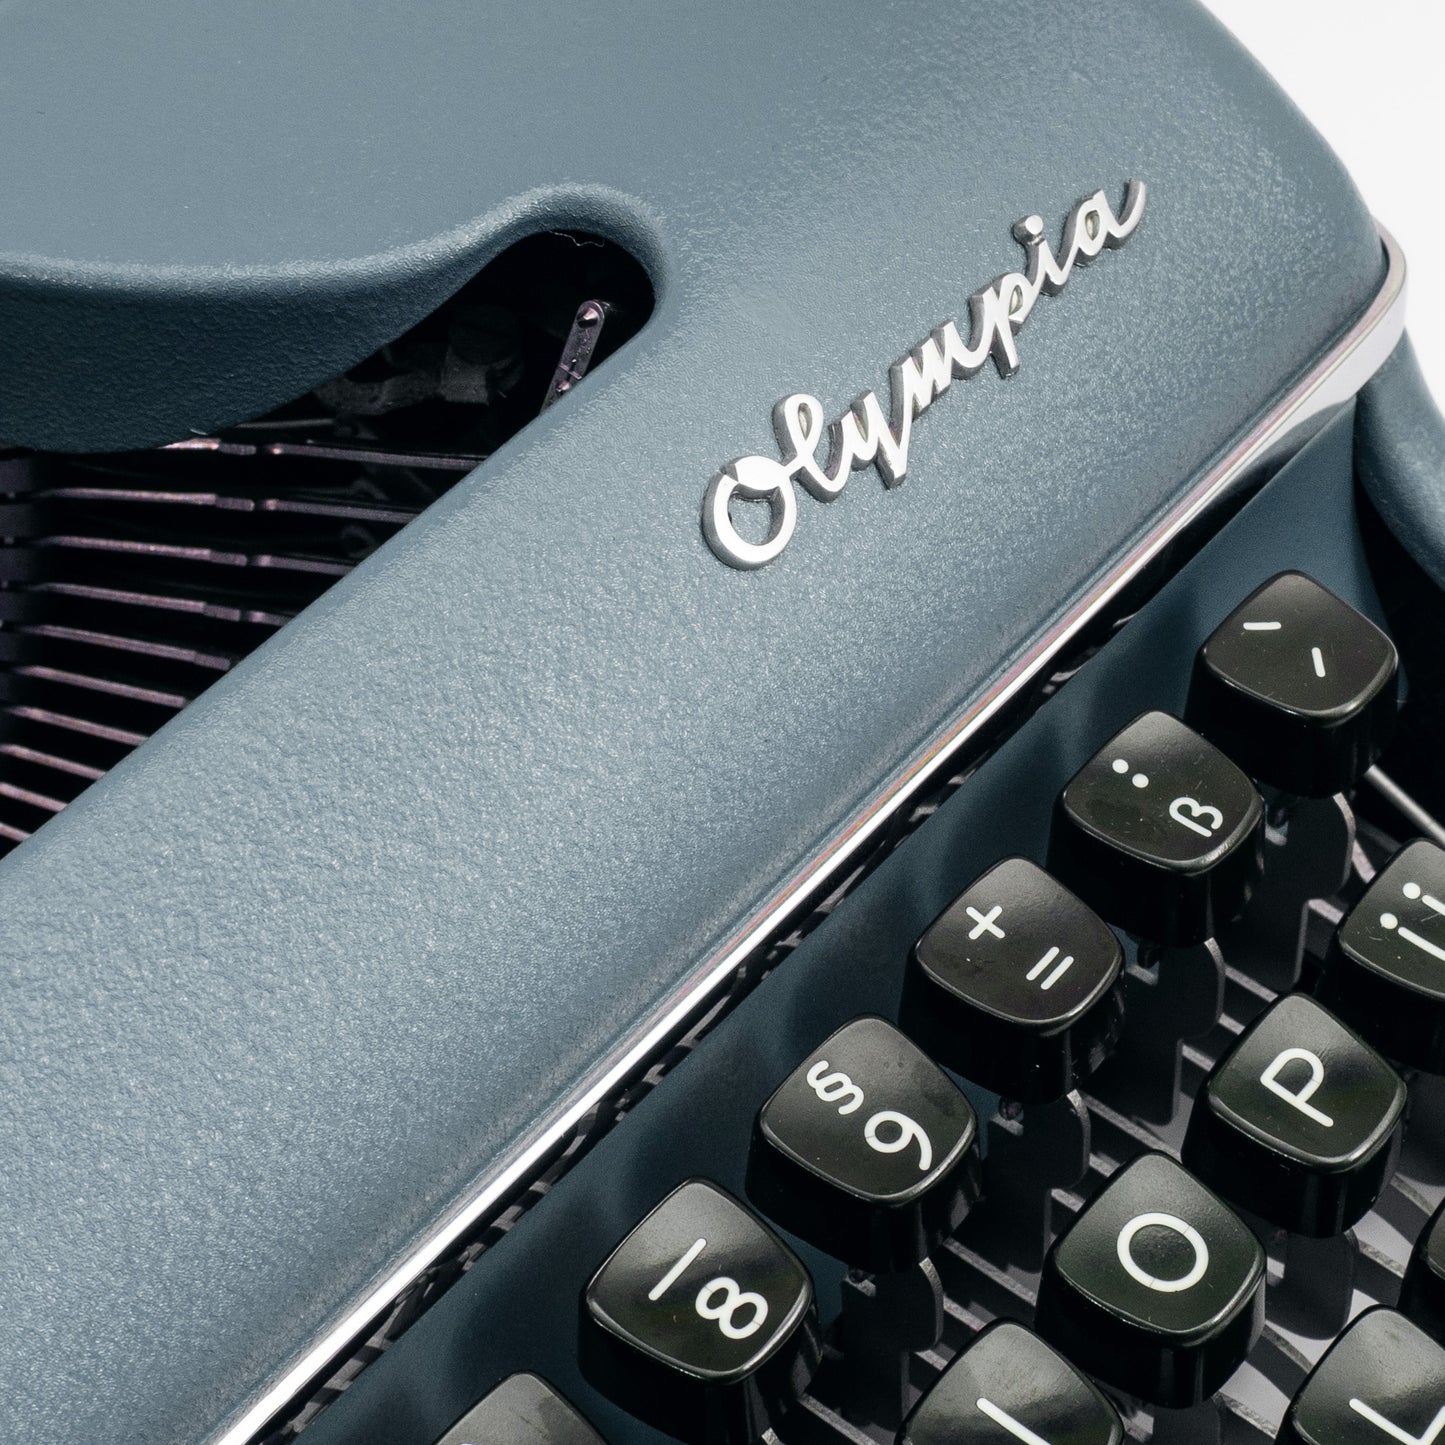 Slate Blue Typewriter Olympia